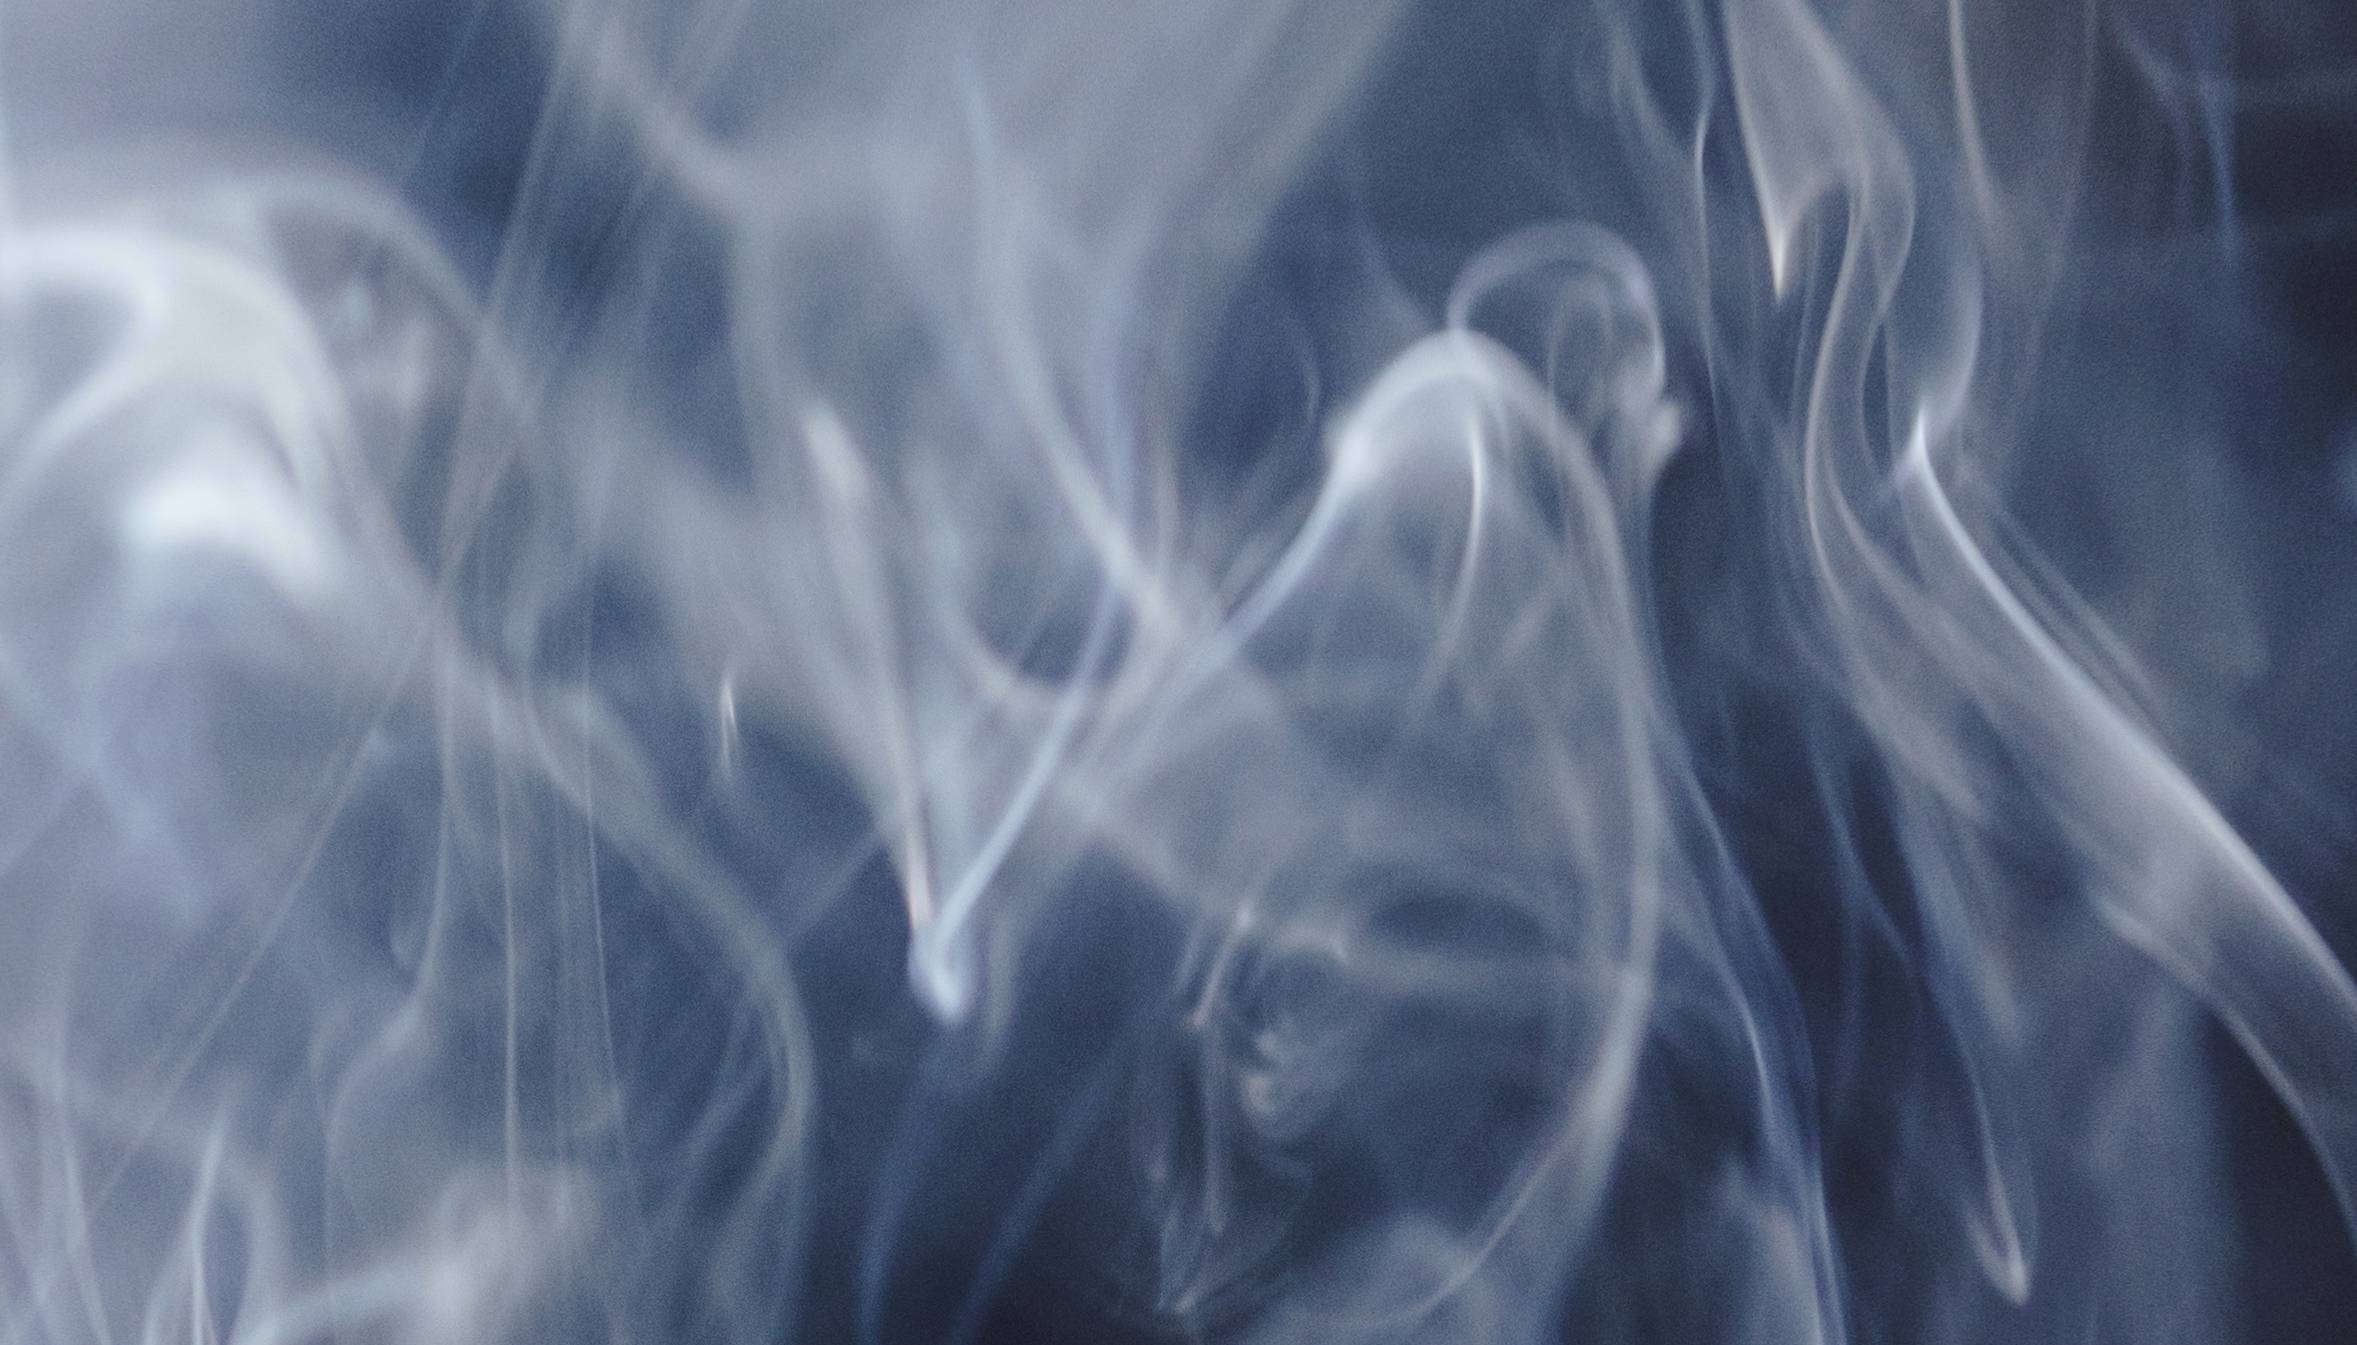 Where There’s Smoke, There’s... Increasing Regulatory Focus